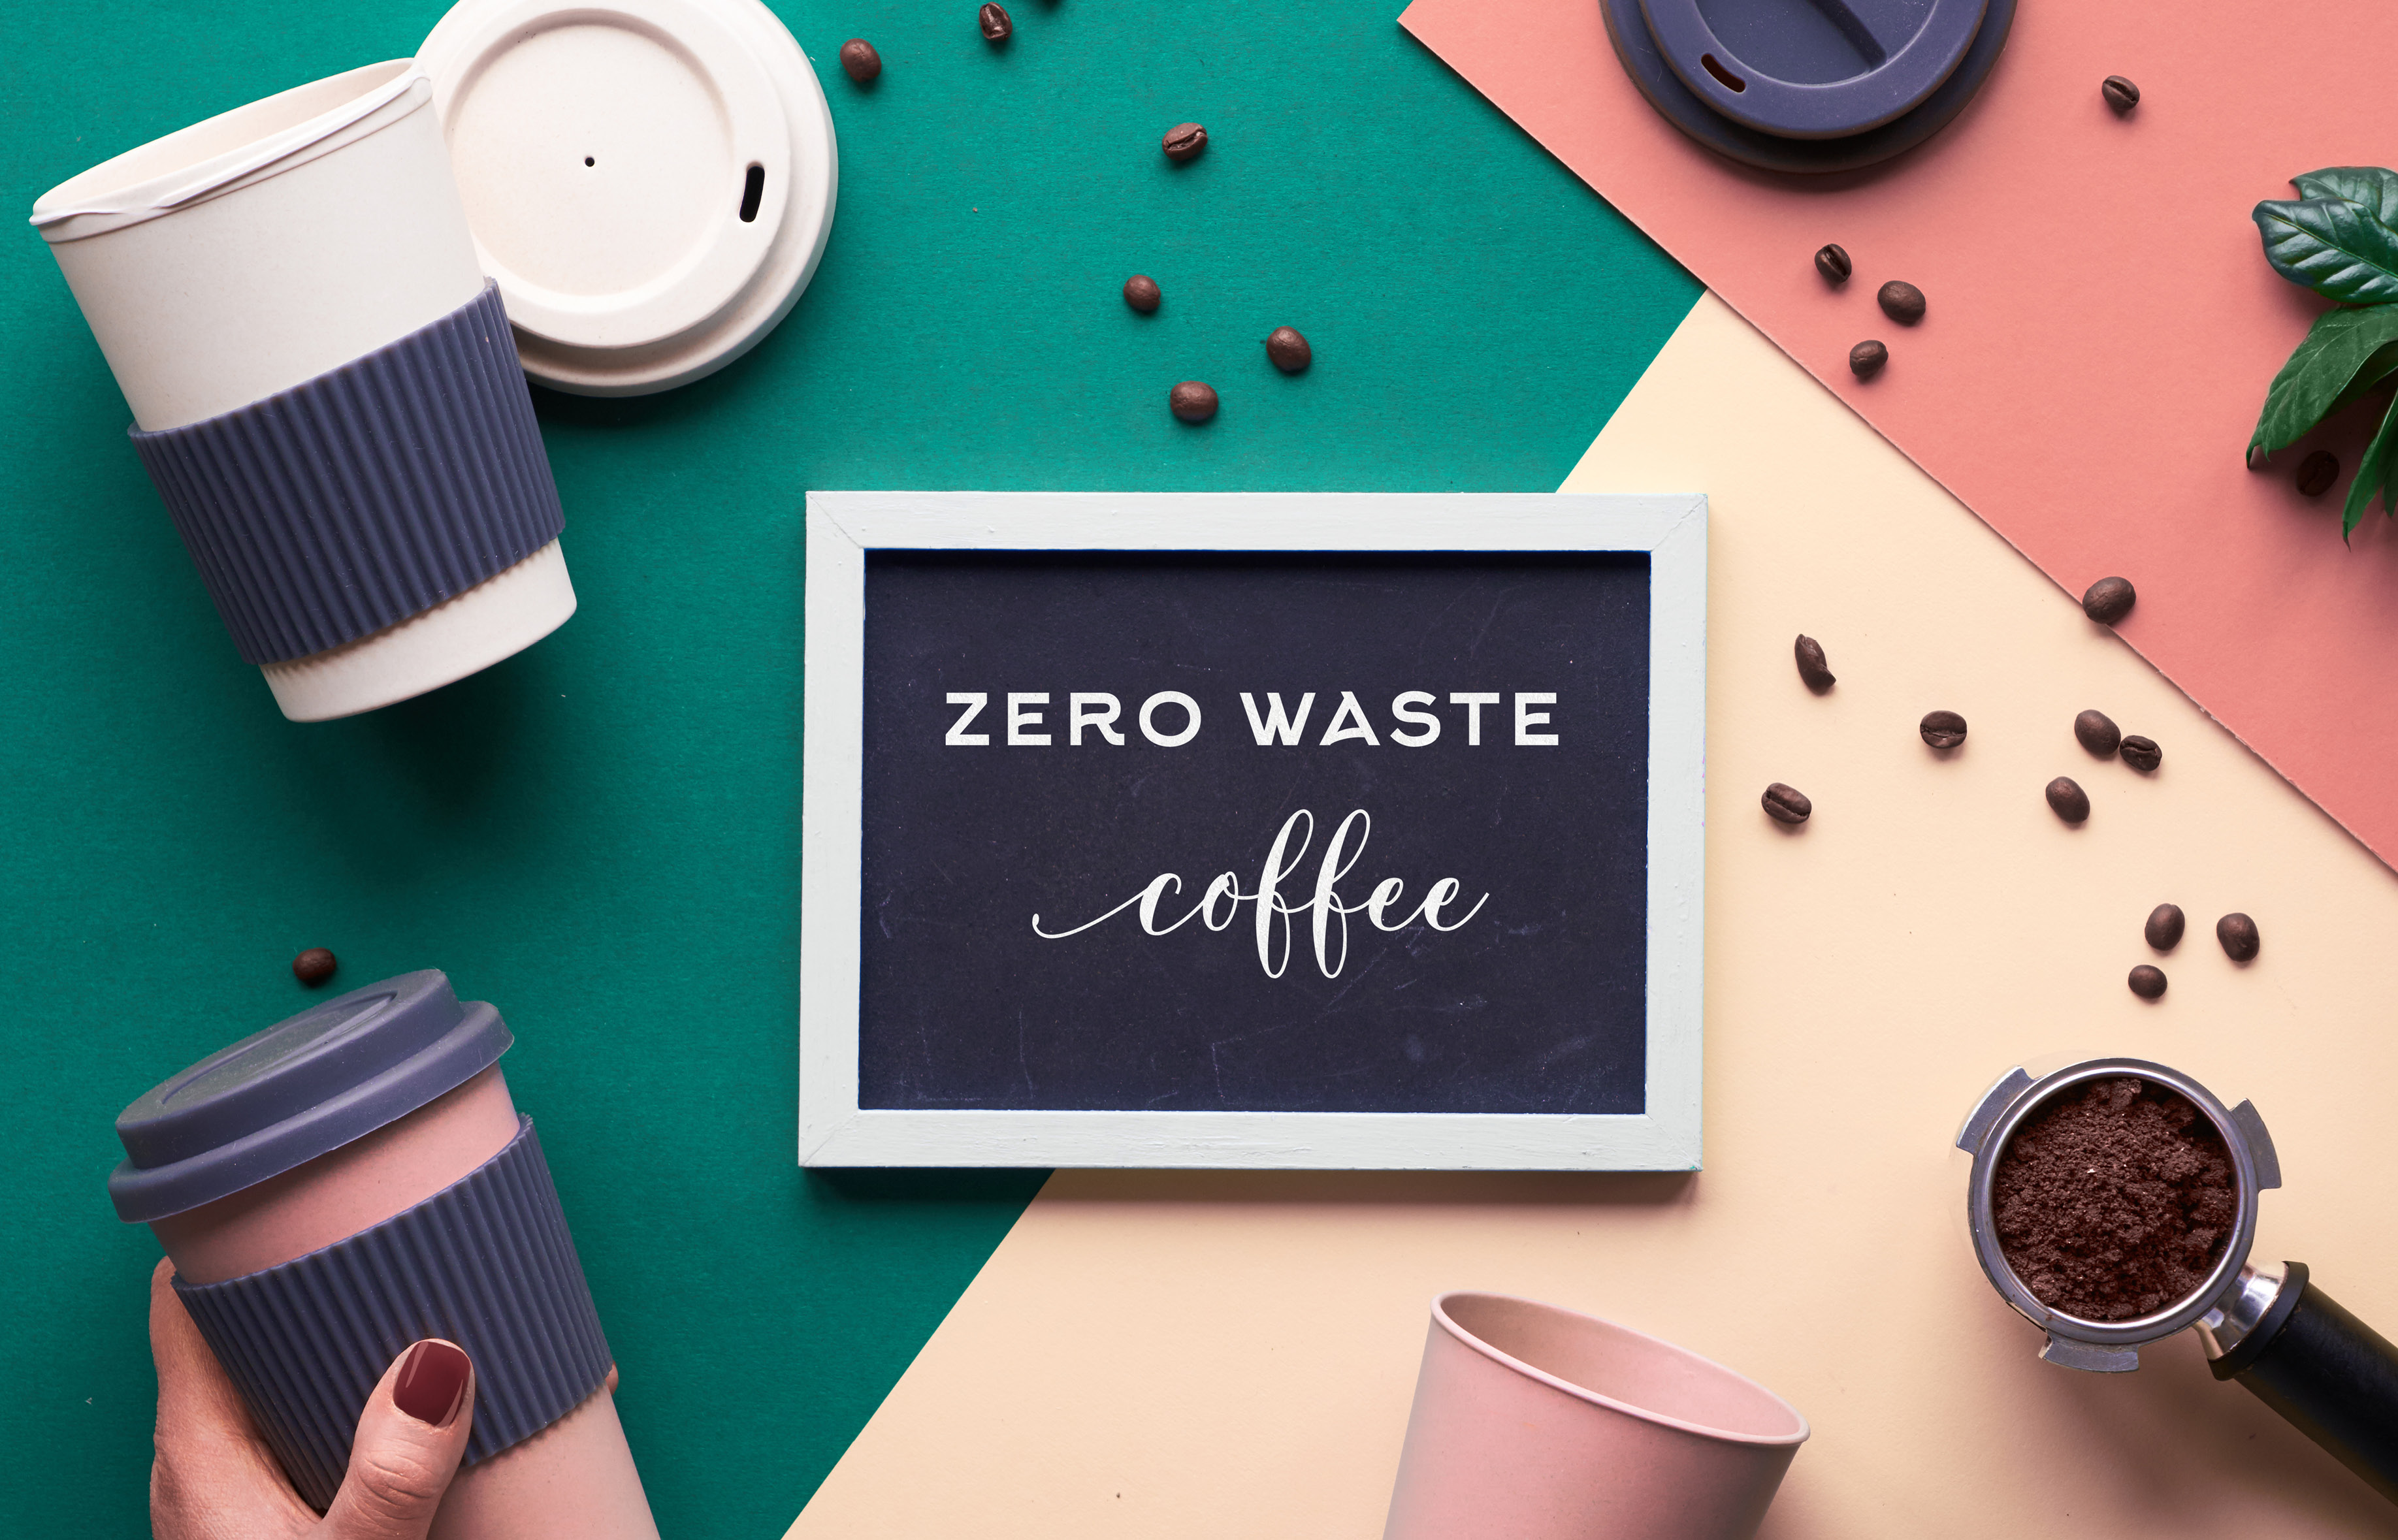 Zero waste coffee